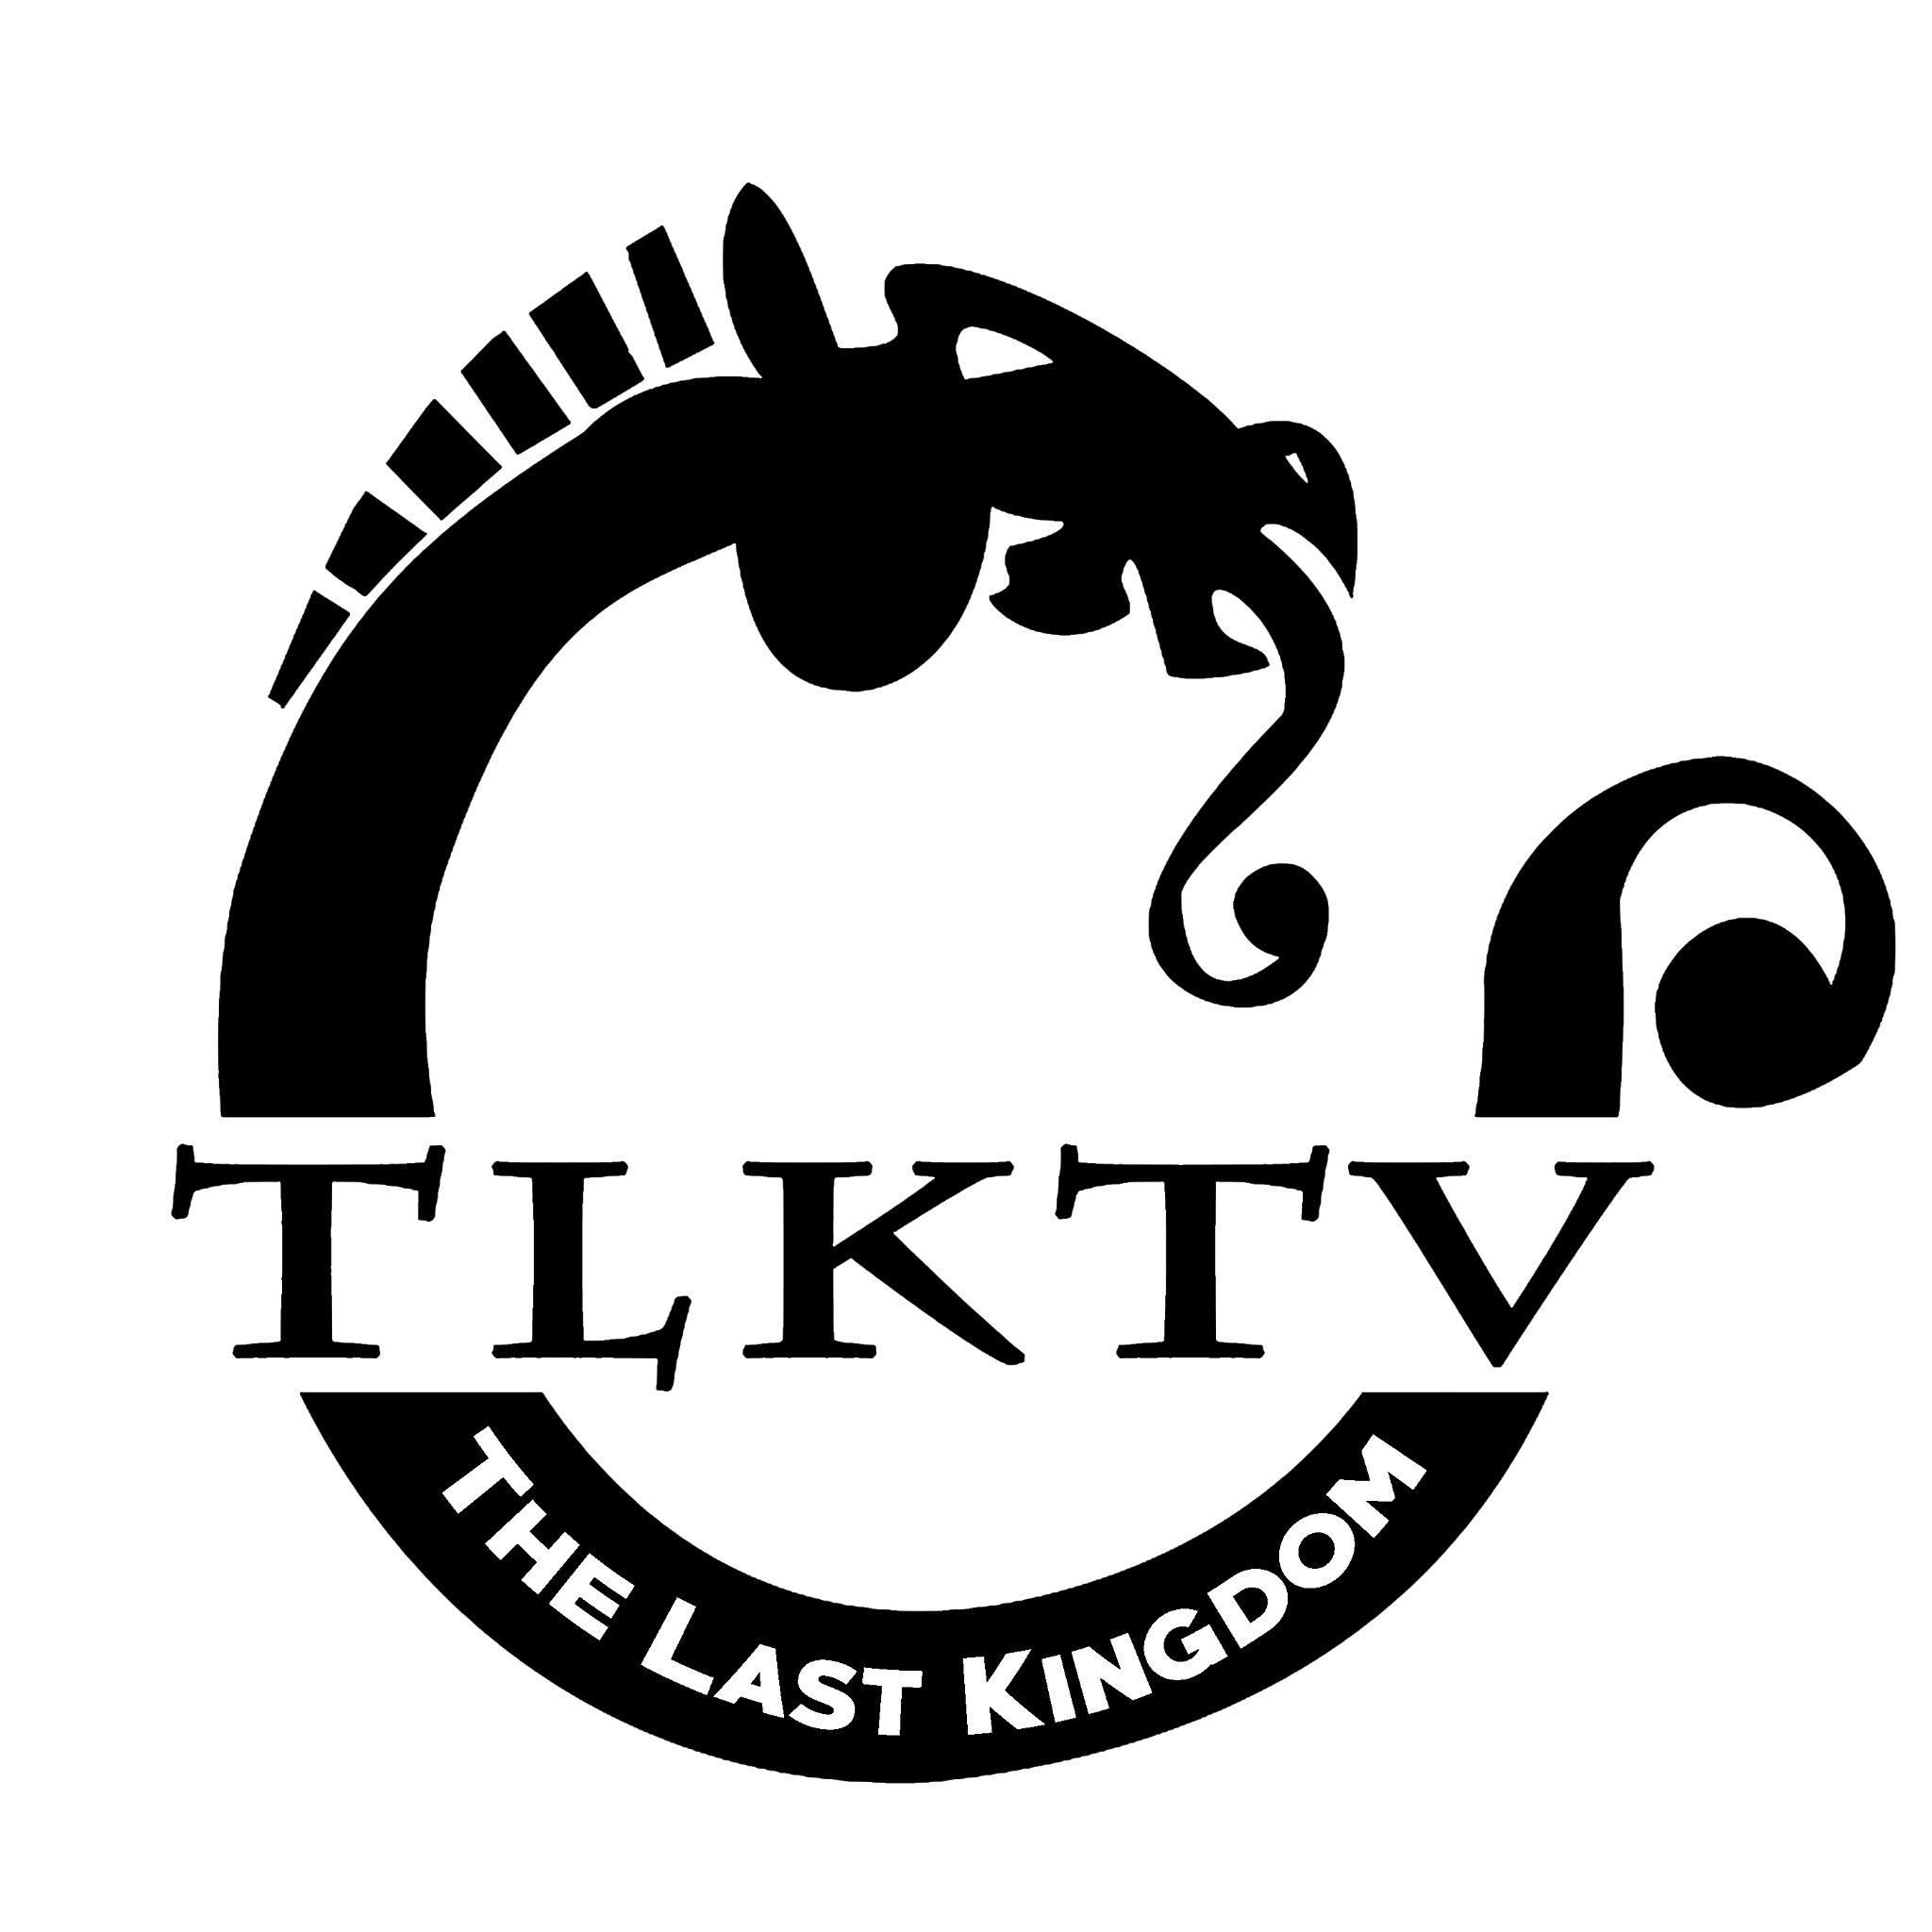 Join us on Facebook
TLKTV group
Arselings For Life ⚔🛡❤
#TheLastKingdom